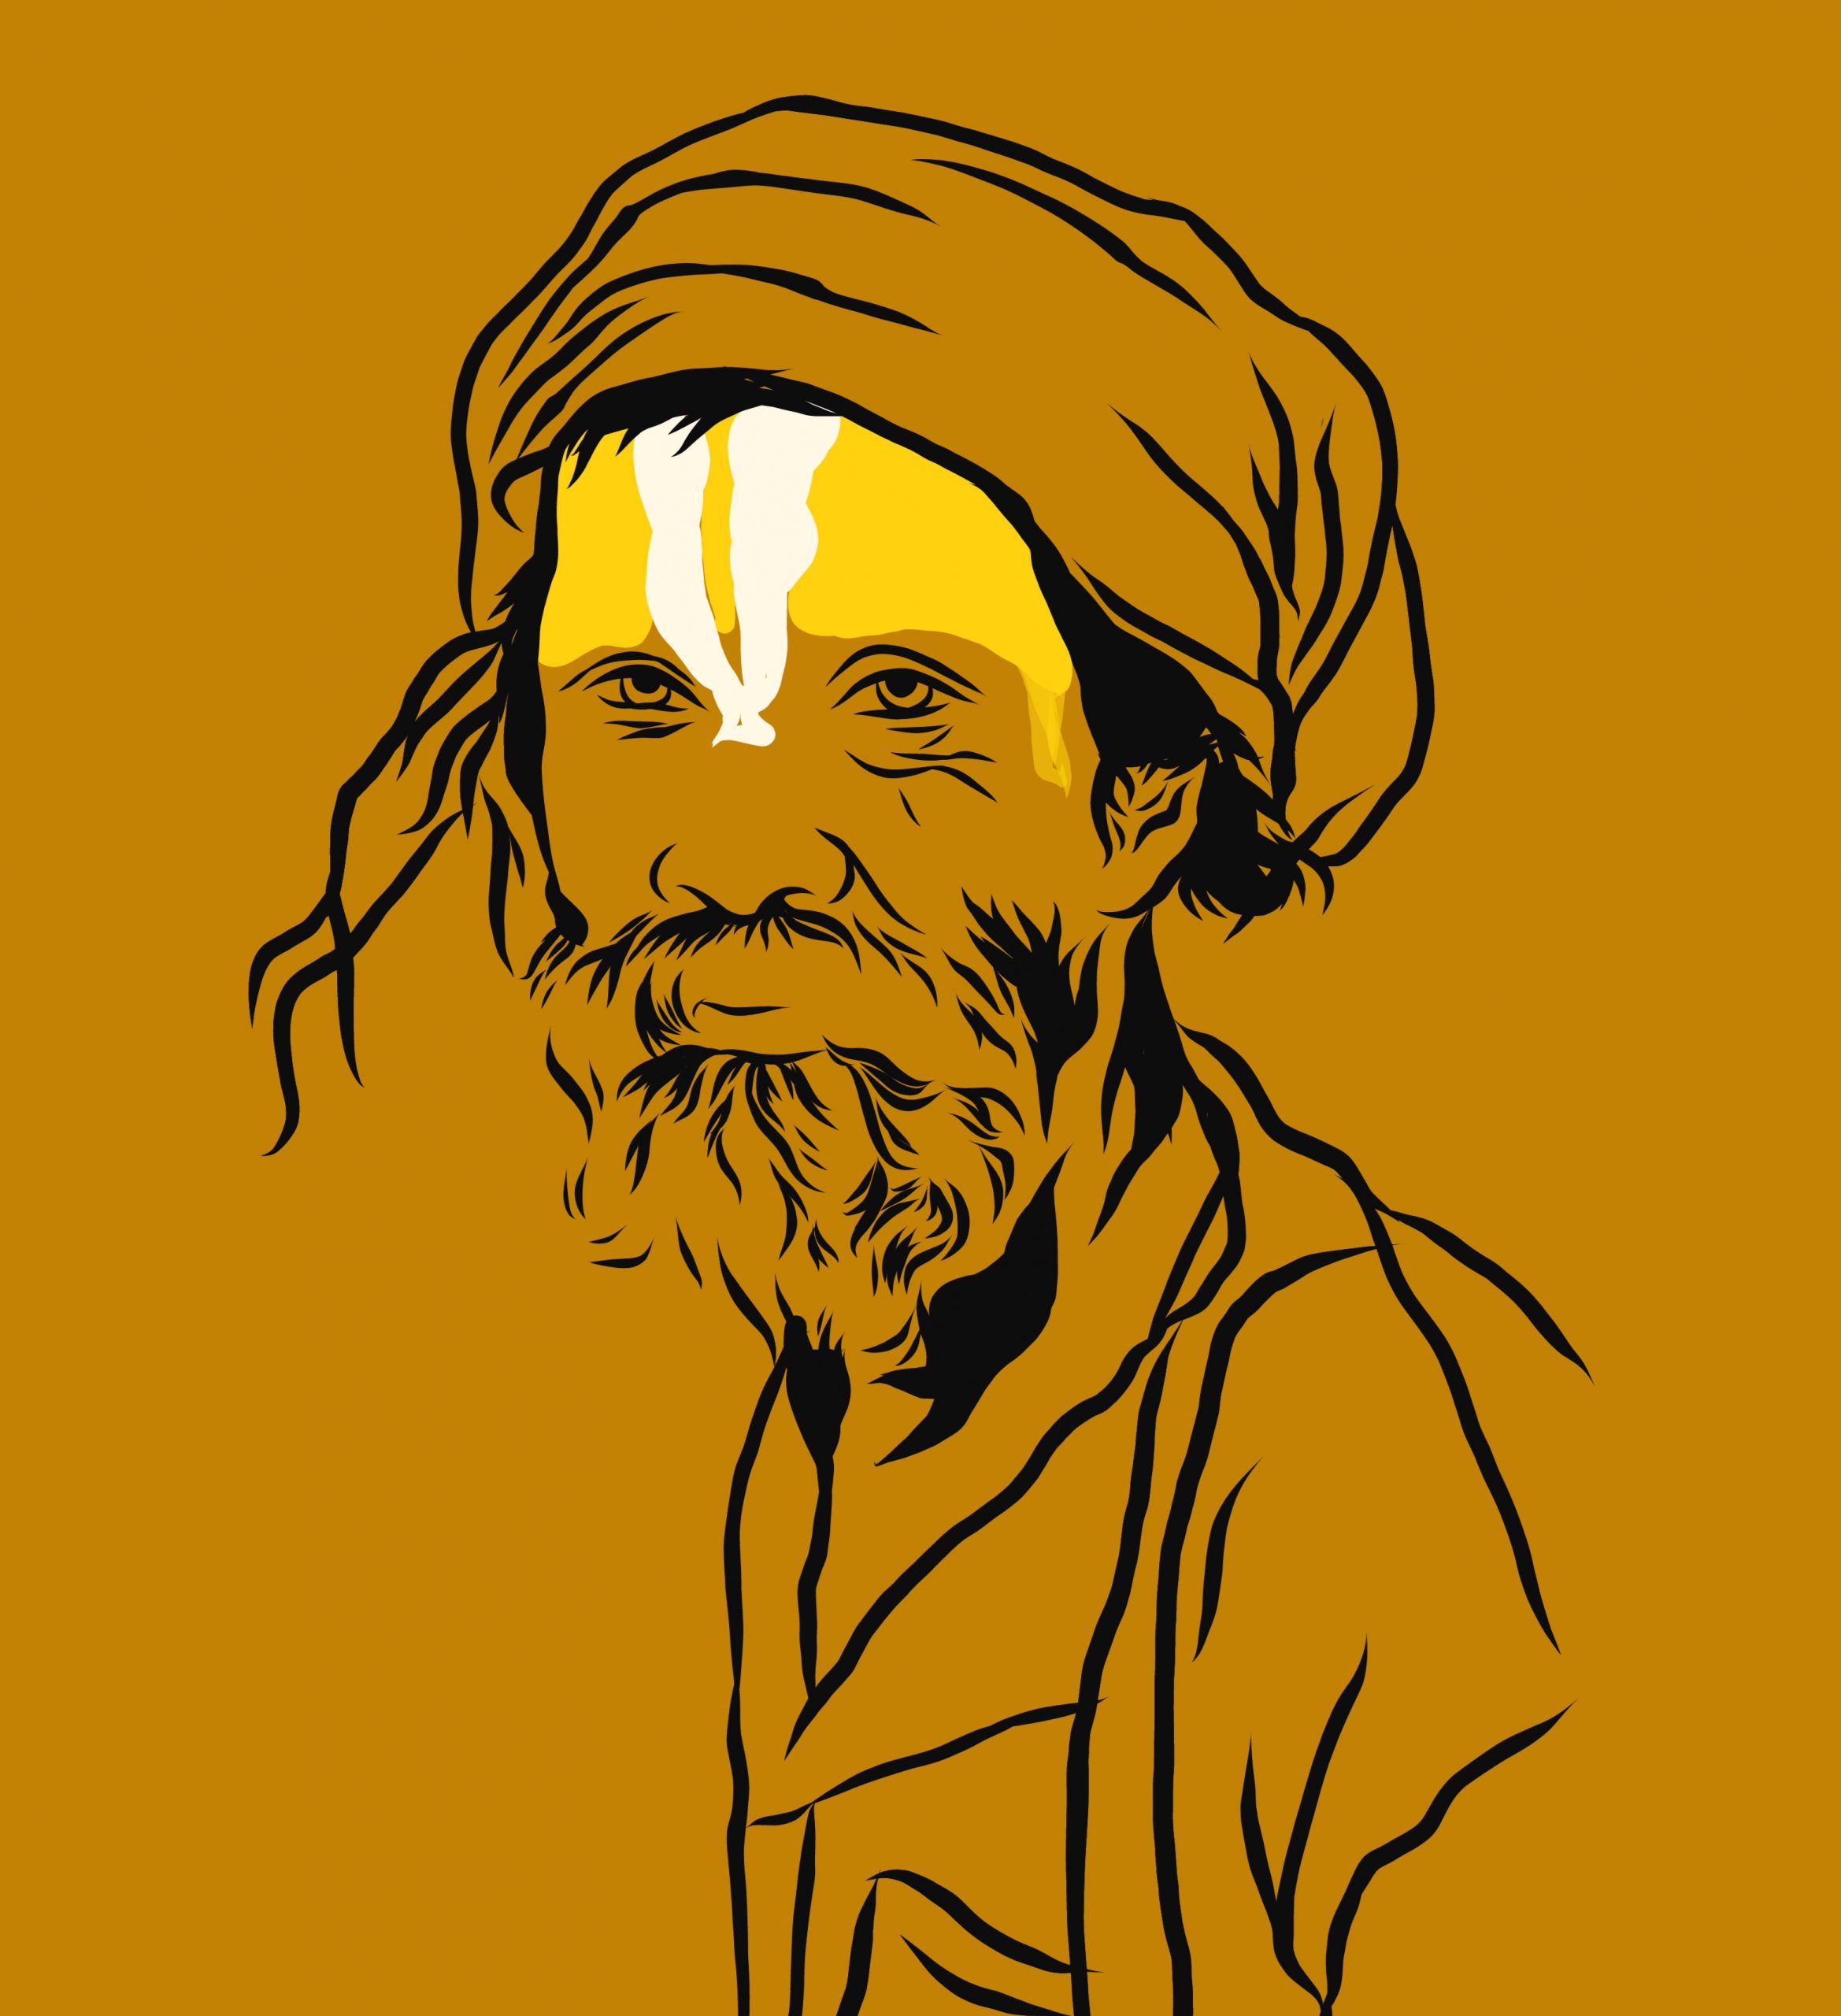 Portrait illustration of an Indian monk